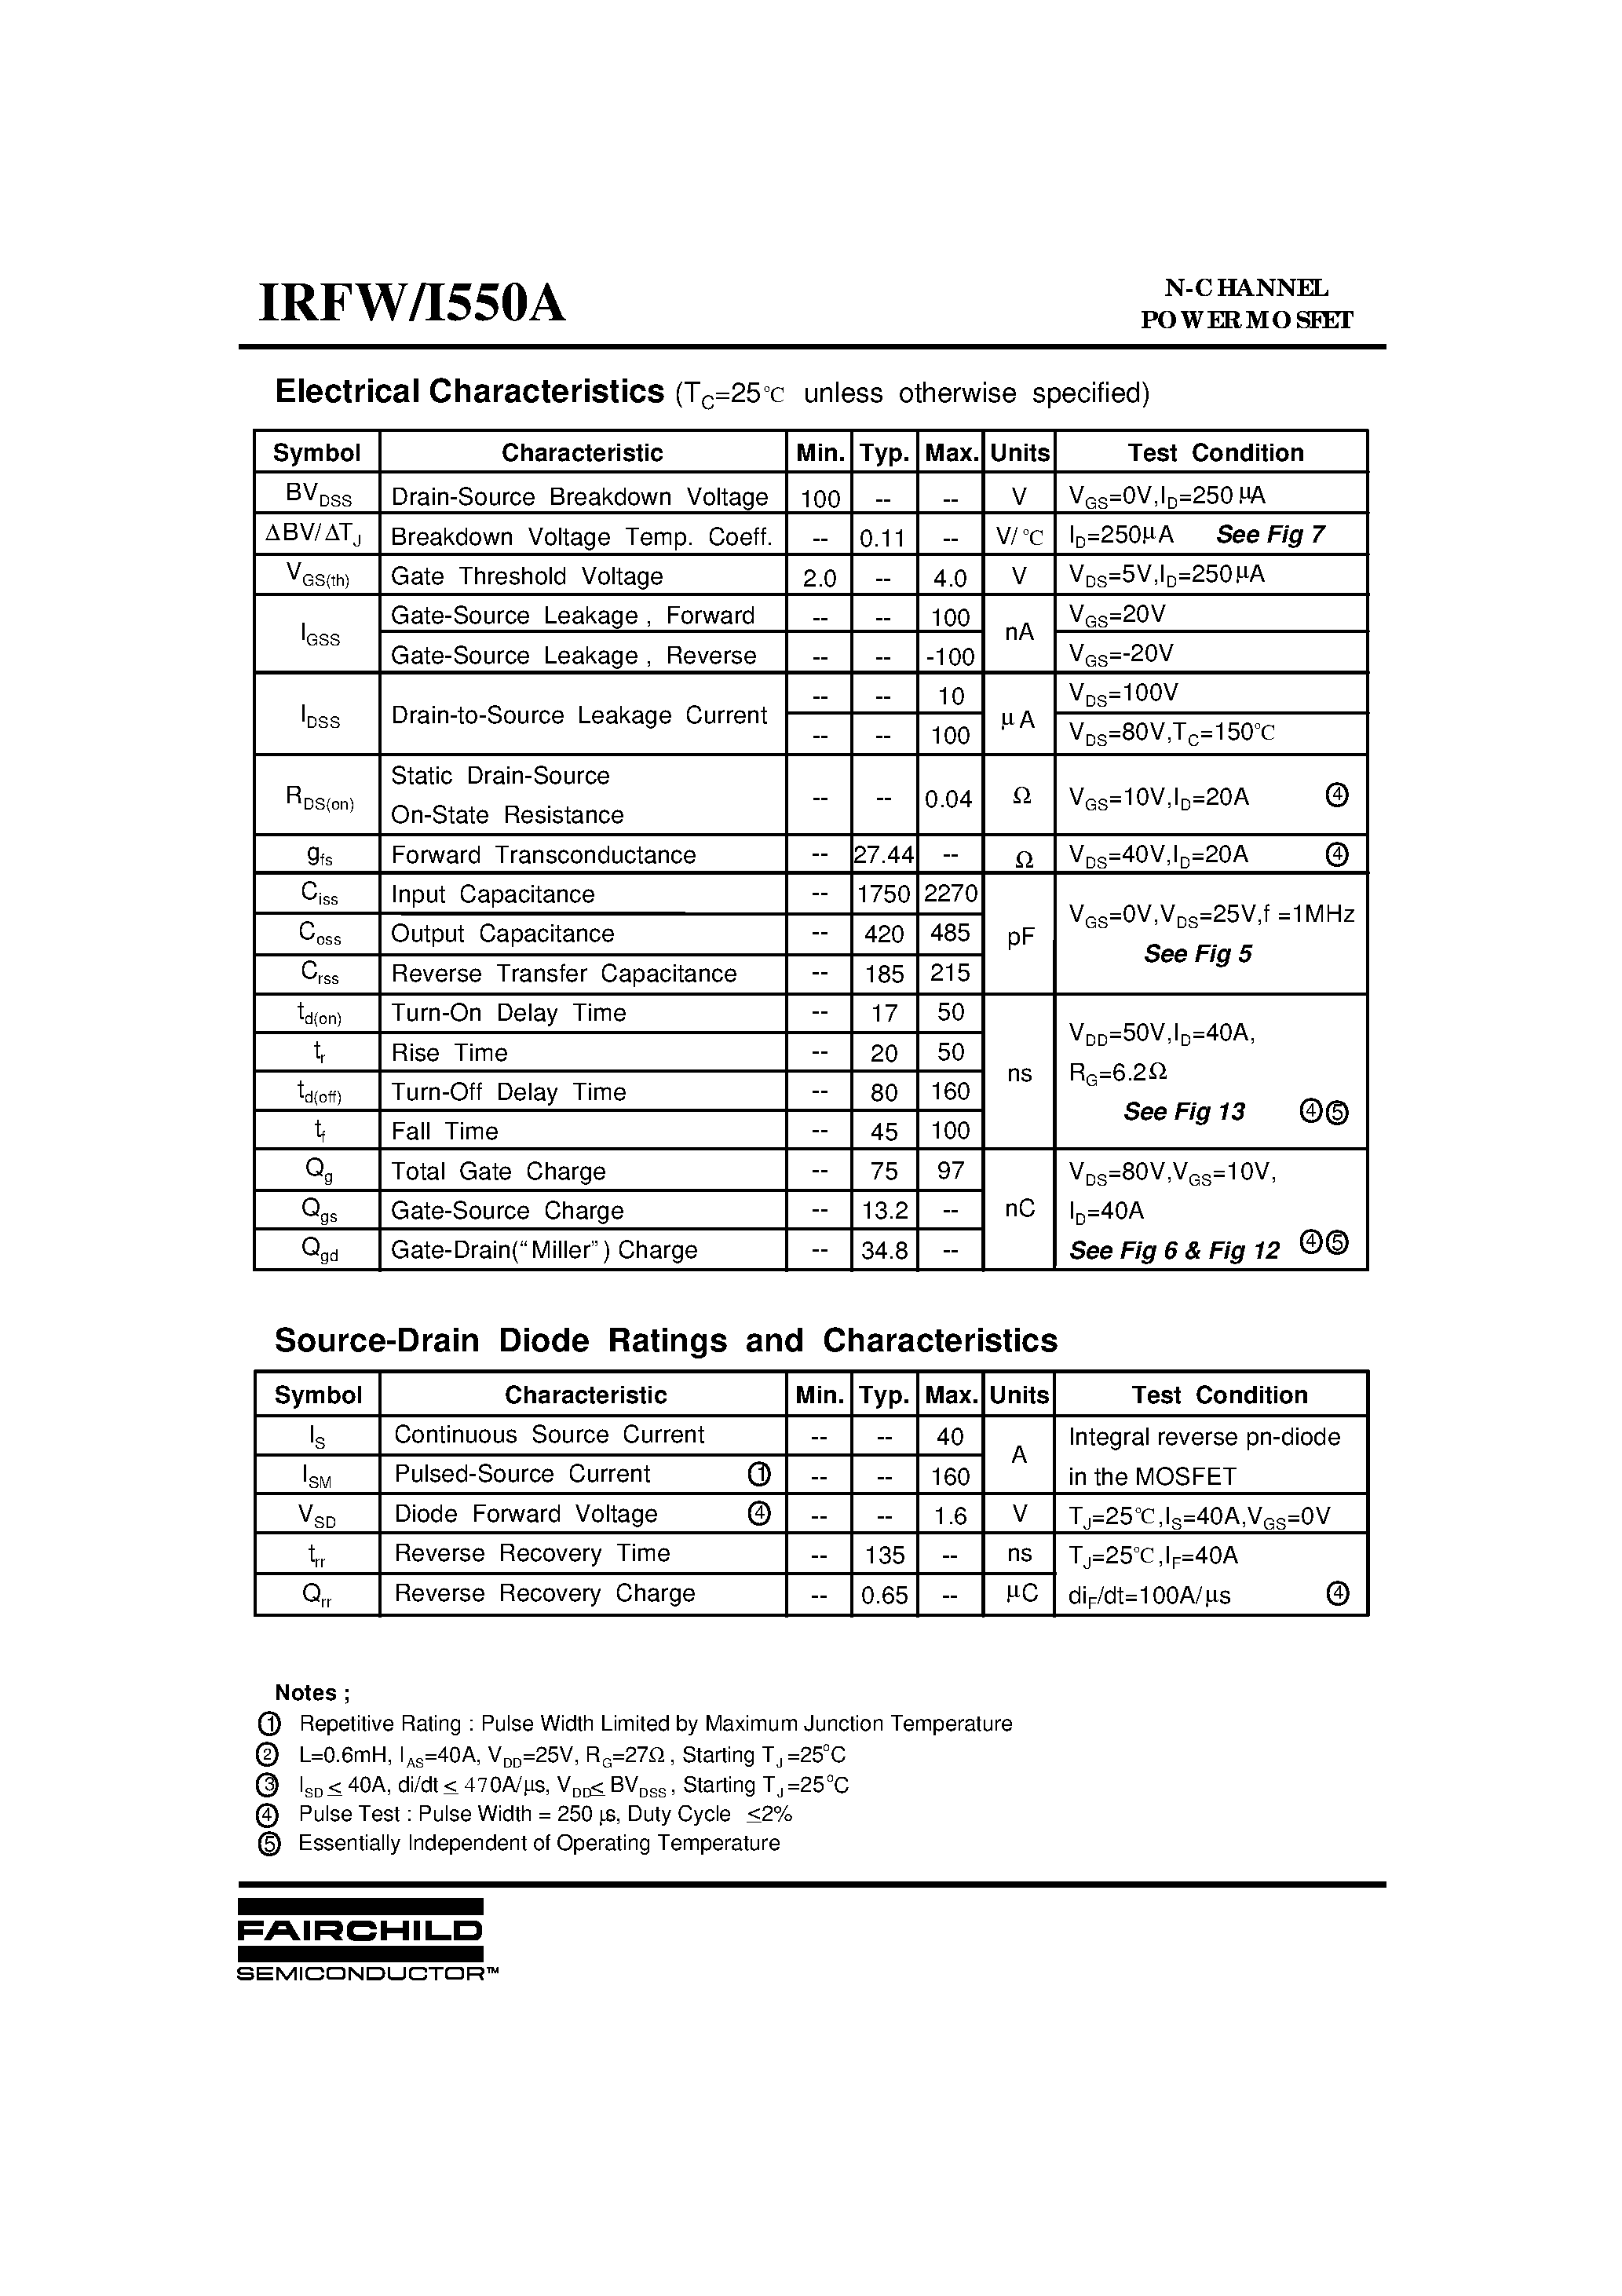 Datasheet IRFI550A - (IRFI550A / IRFW550A) Advanced Power MOSFET page 2